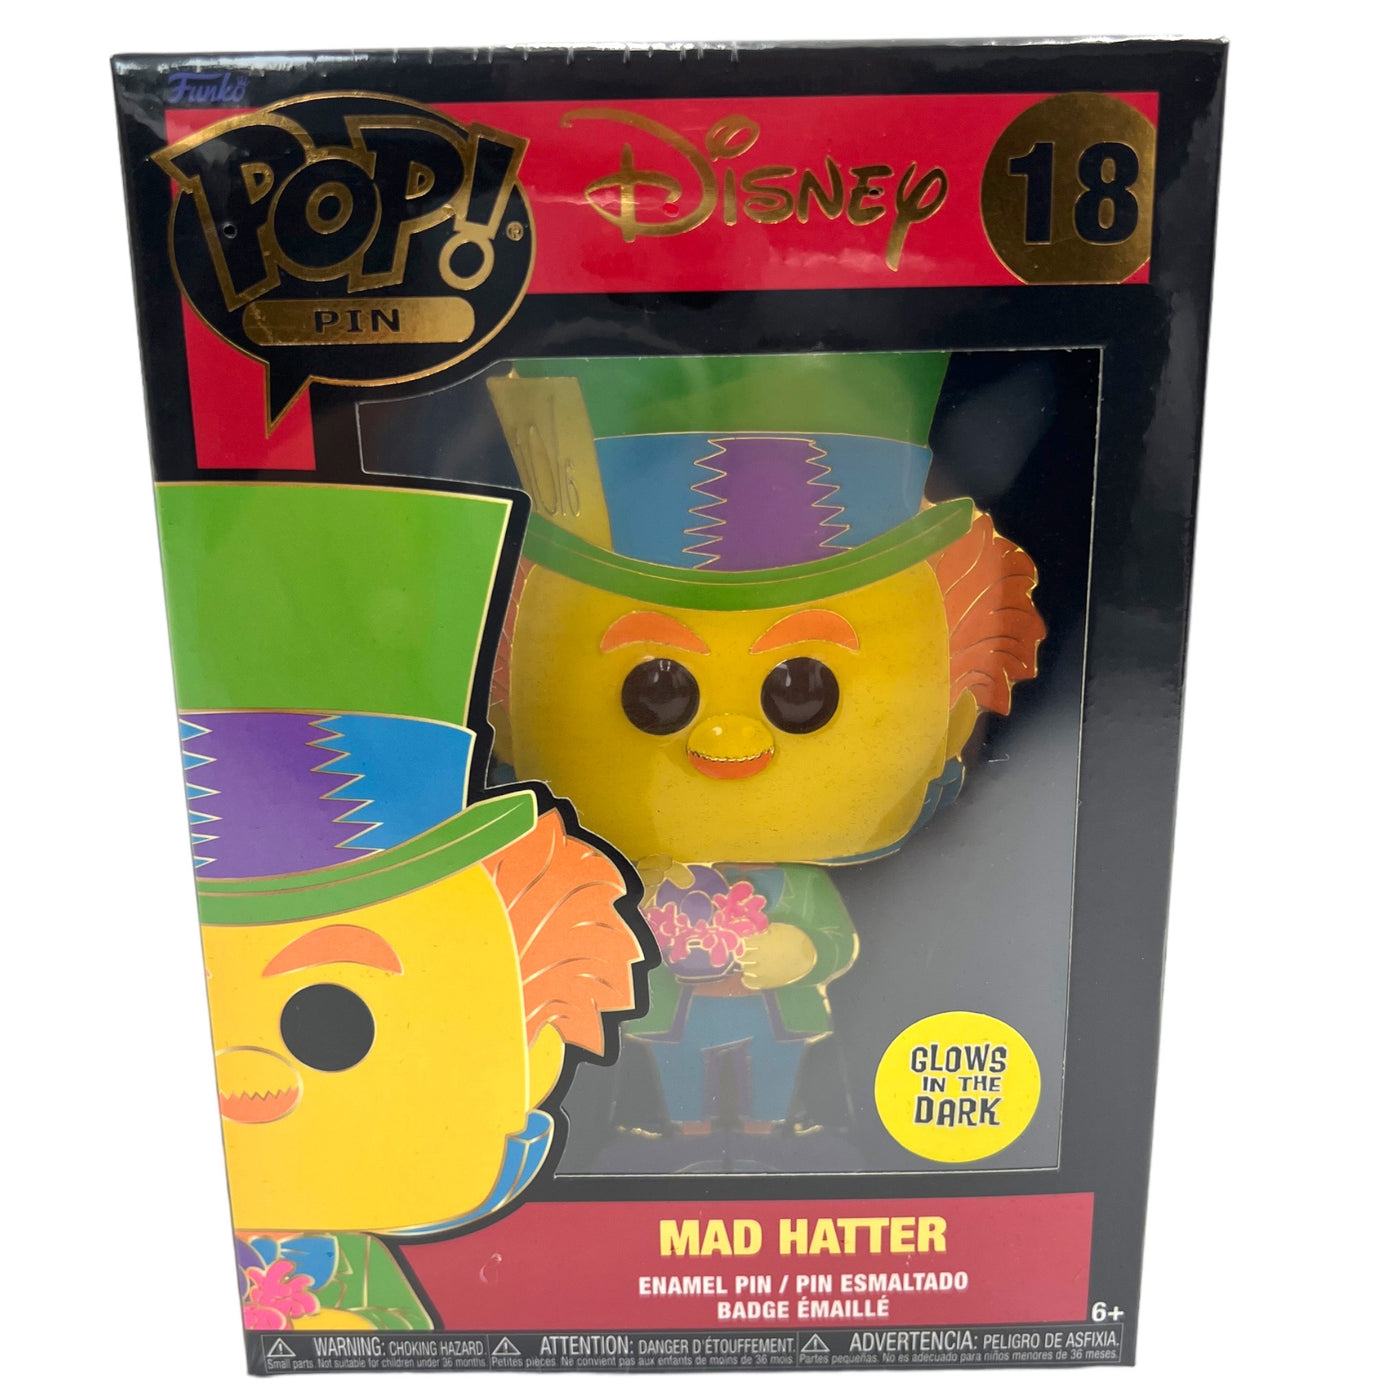 Funko Pop! Pin Disney Alice in Wonderland Mad Hatter Glow in the Dark